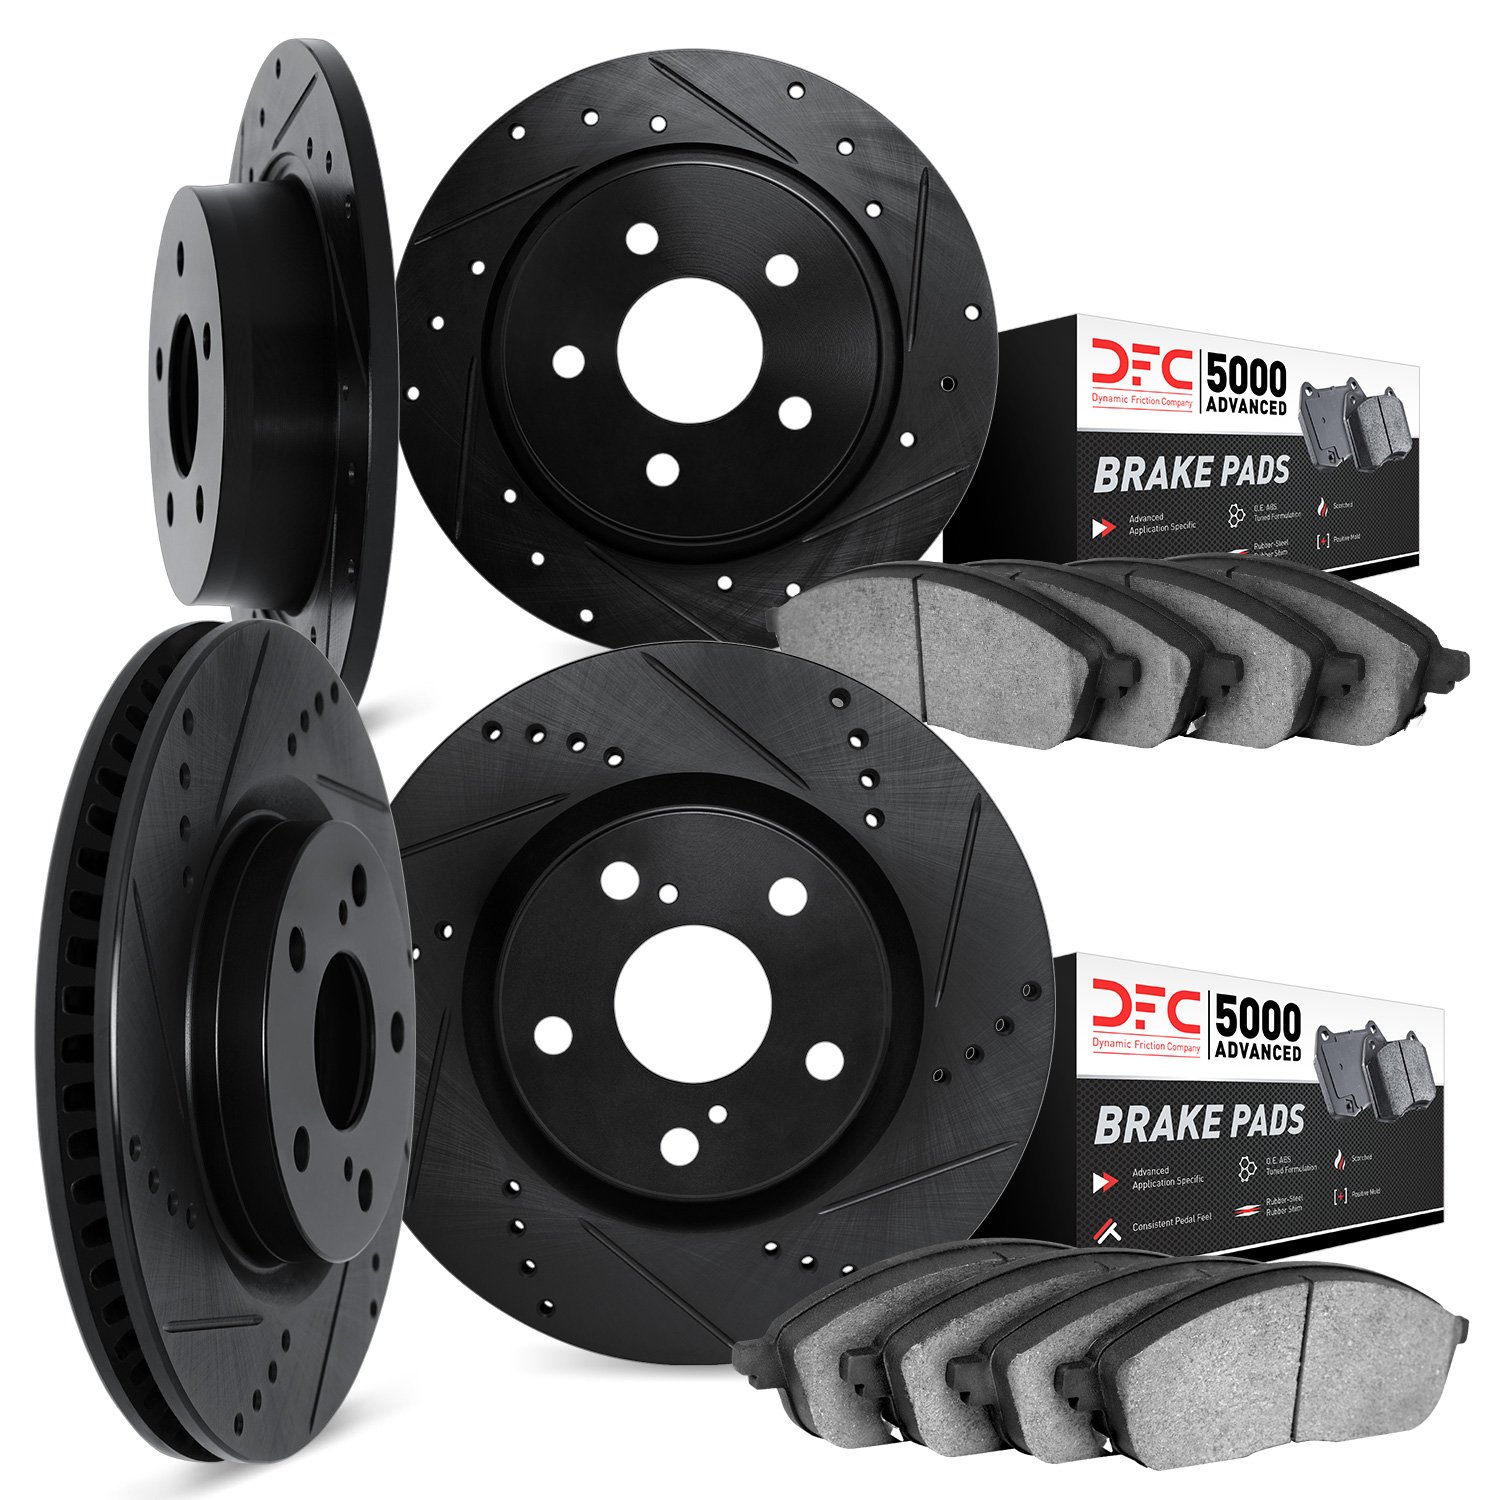 8504-80050 Drilled/Slotted Brake Rotors w/5000 Advanced Brake Pads Kit [Black], 2013-2015 Ford/Lincoln/Mercury/Mazda, Position: